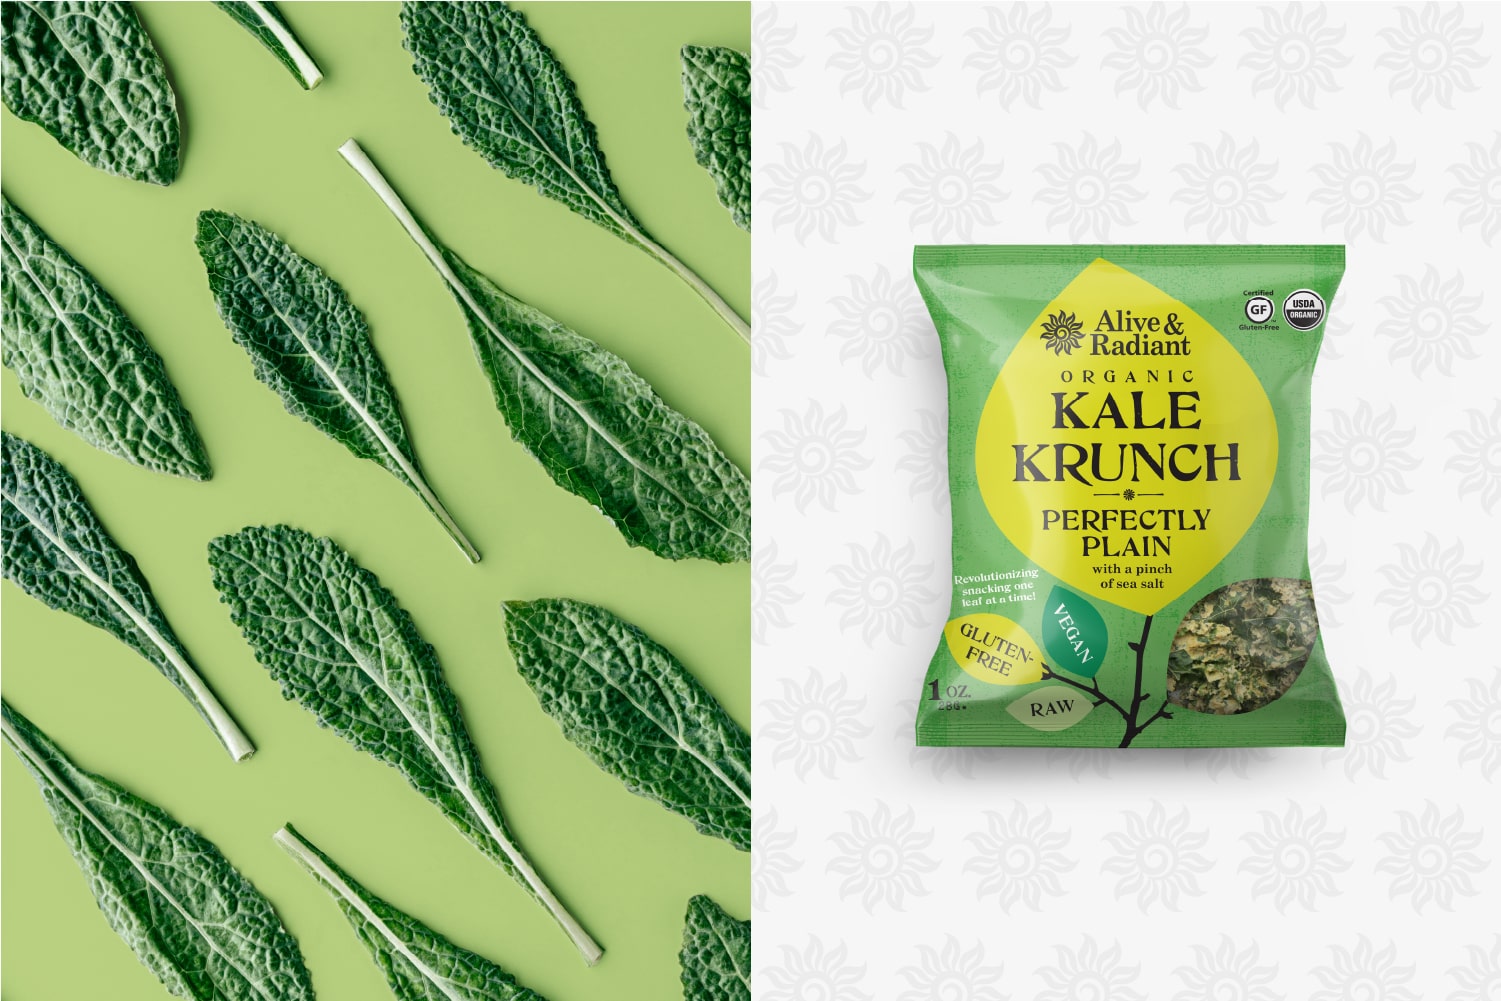 Alive & Radiant Kale Krunch Perfectly Plain